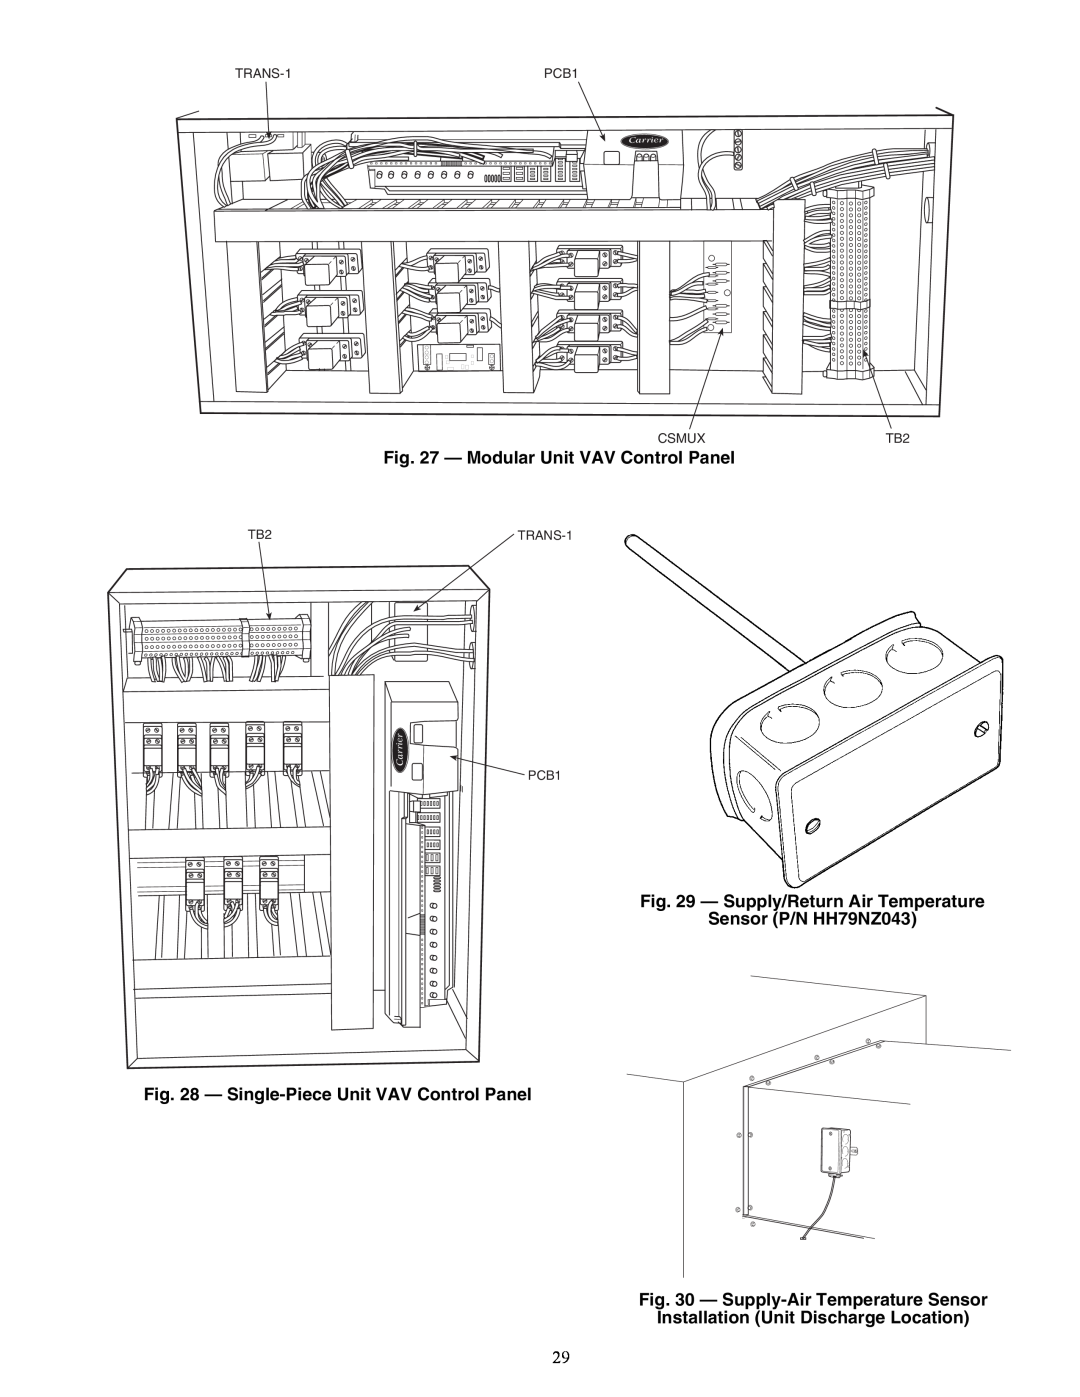 Carrier 50BV020-064 a50-7275ef, Modular Unit VAV Control Panel, a39-1867t, Supply/Return Air Temperature, a50-7276ef 